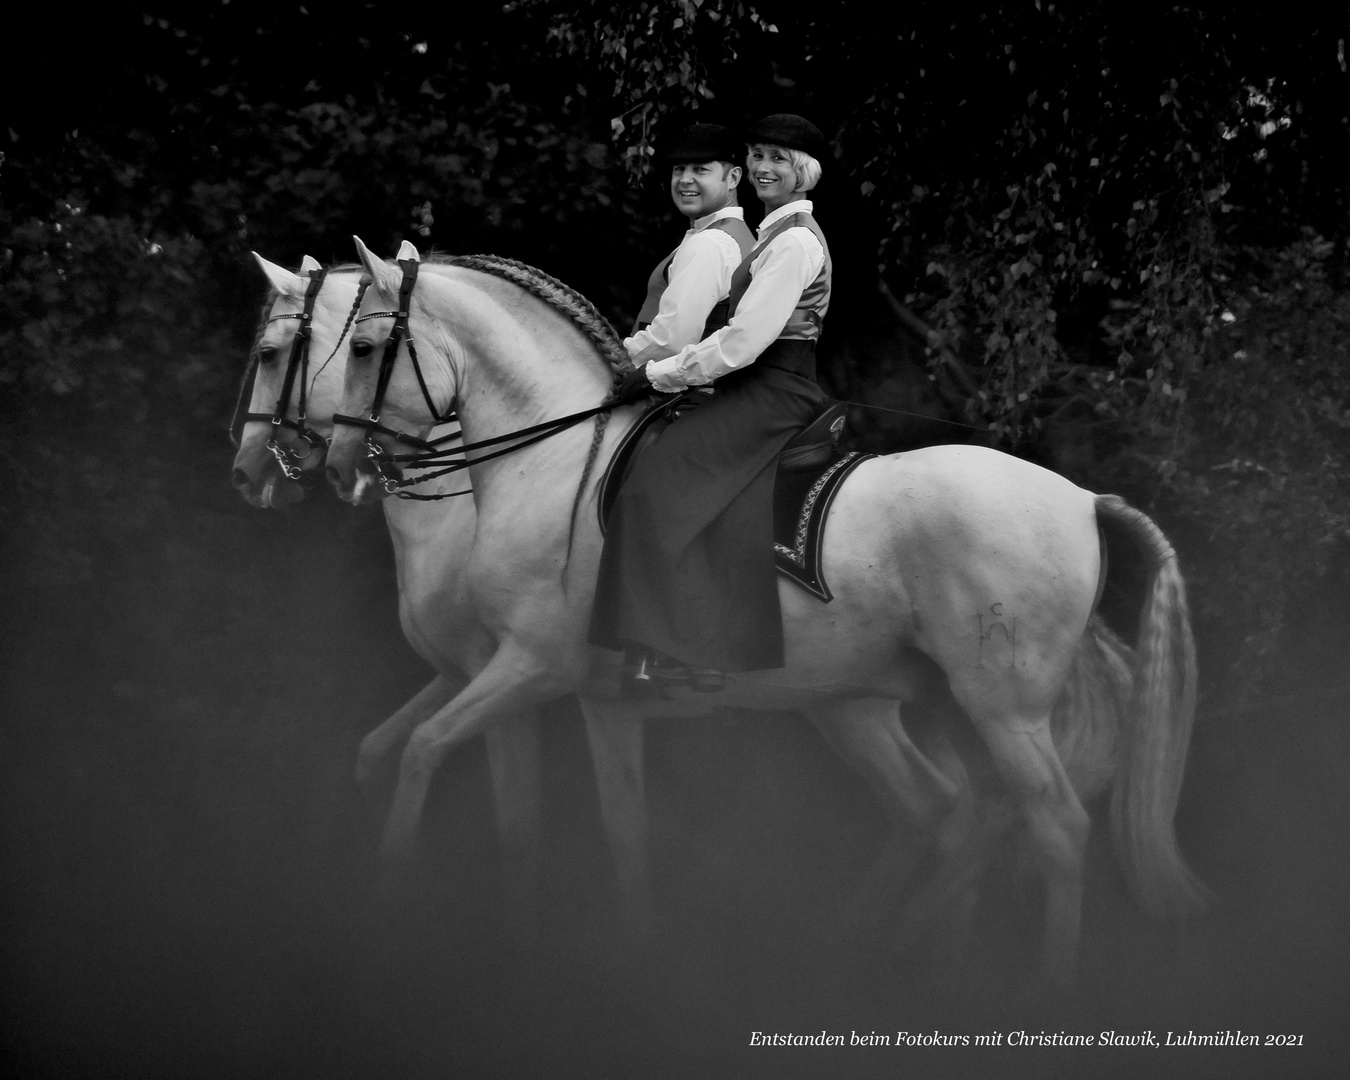 Pferdefotografie mit Christiane Slawik III